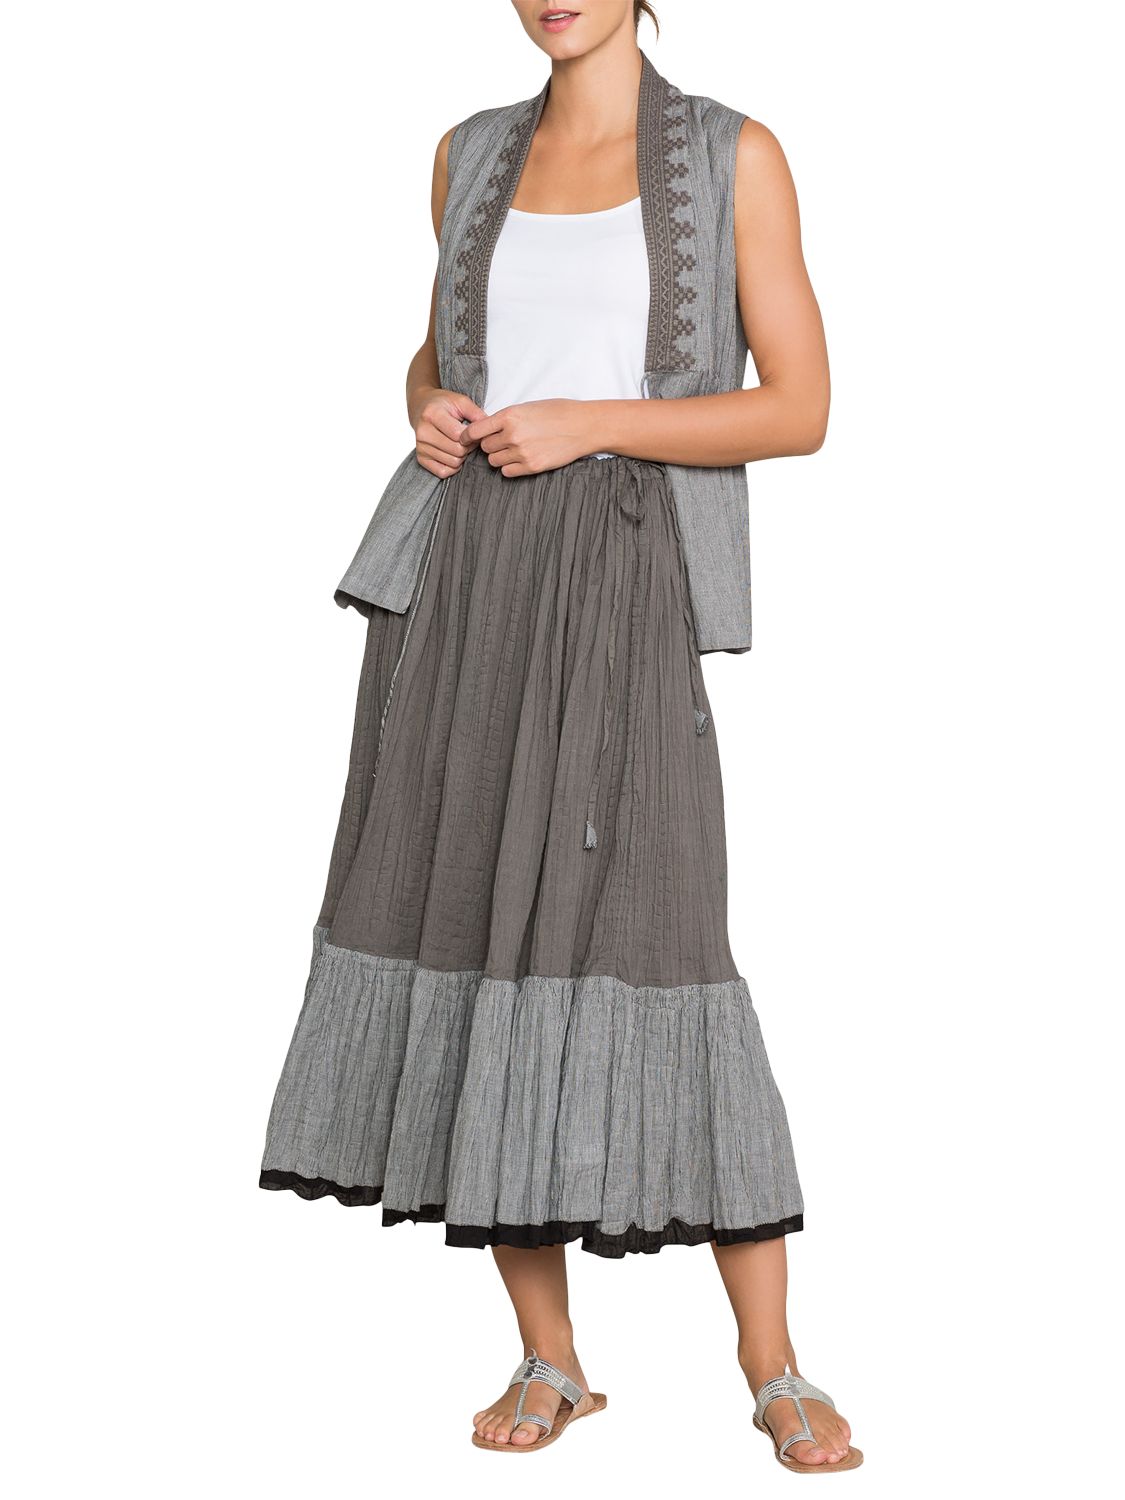 East Amy Crinkle Skirt, Grey/Black